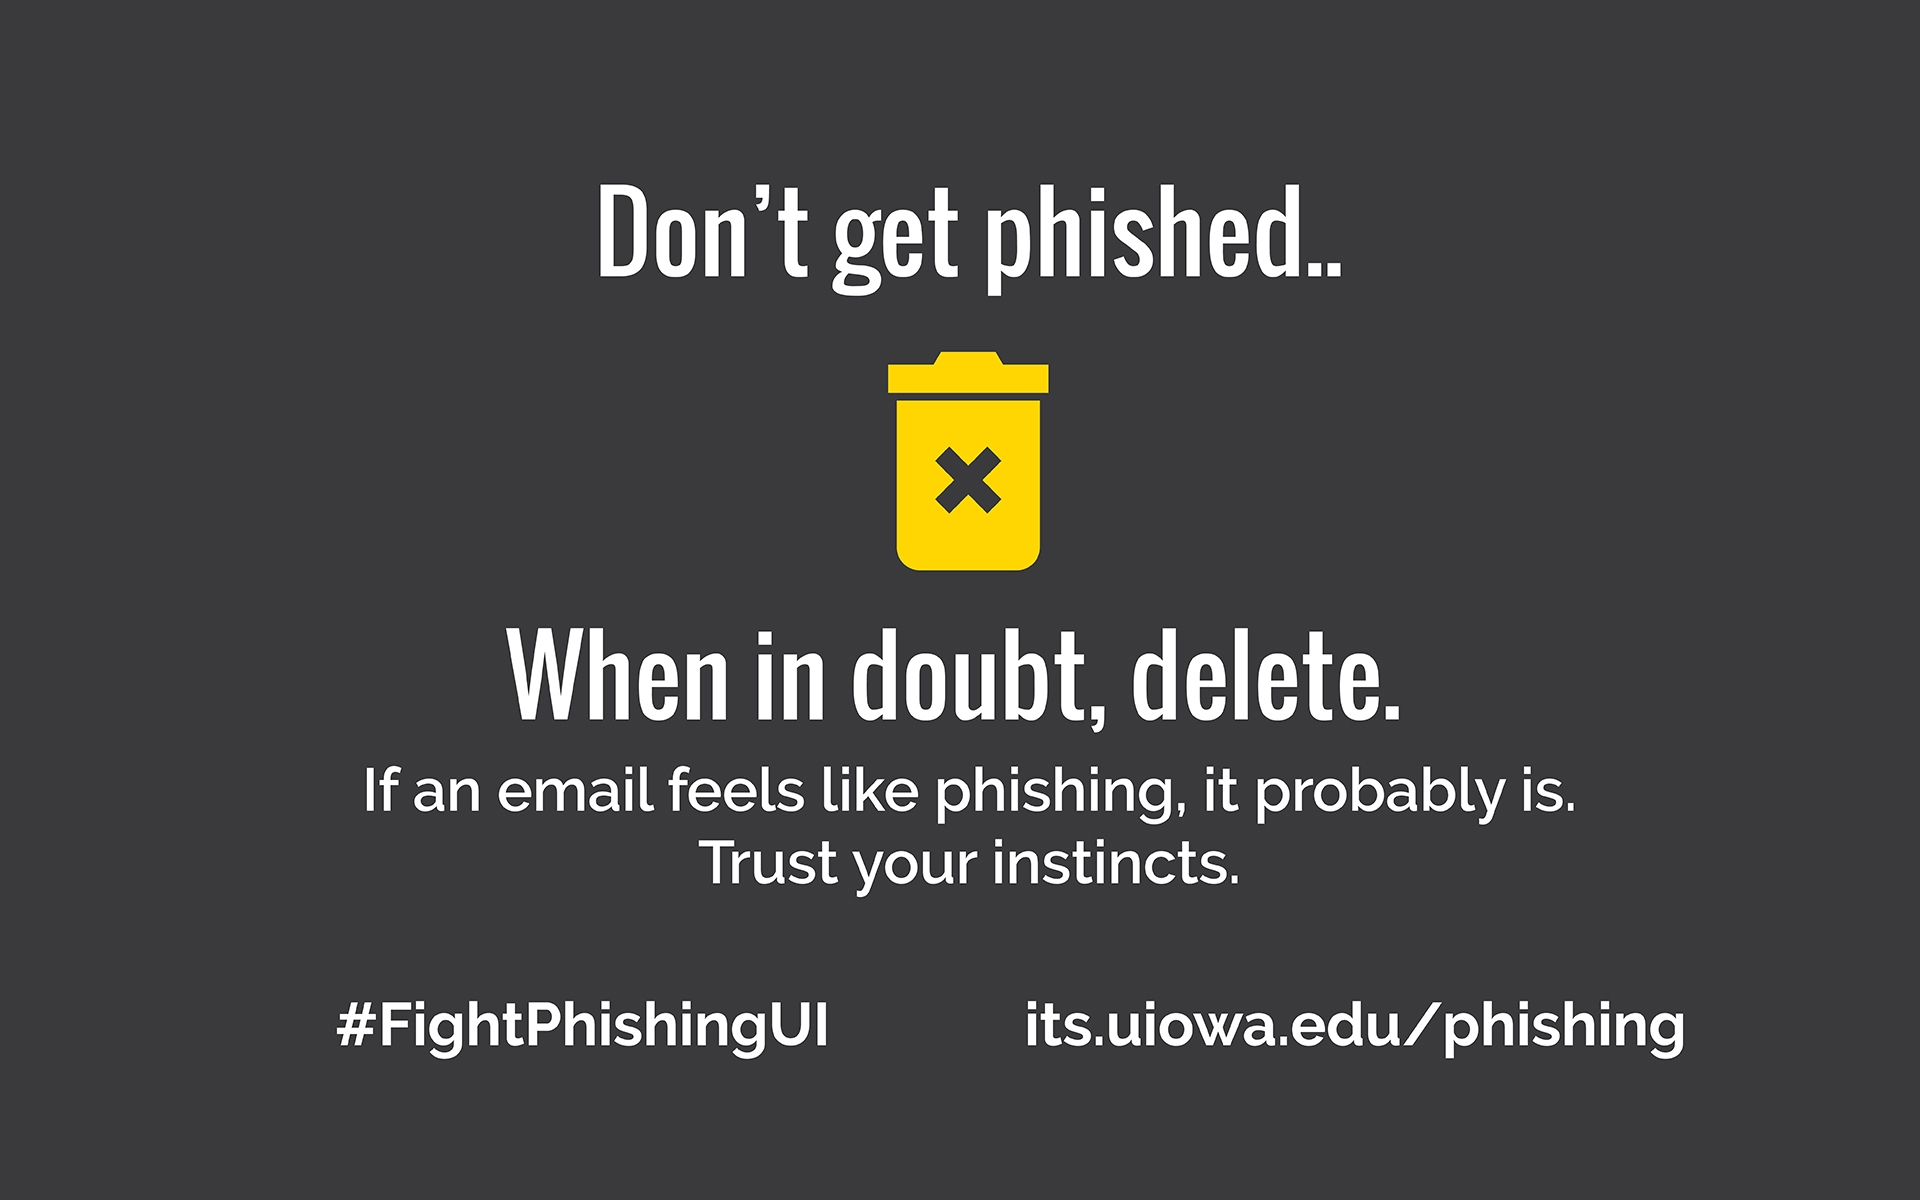 Don't get phished: when in doubt, delete. its.uiowa.edu/phishing